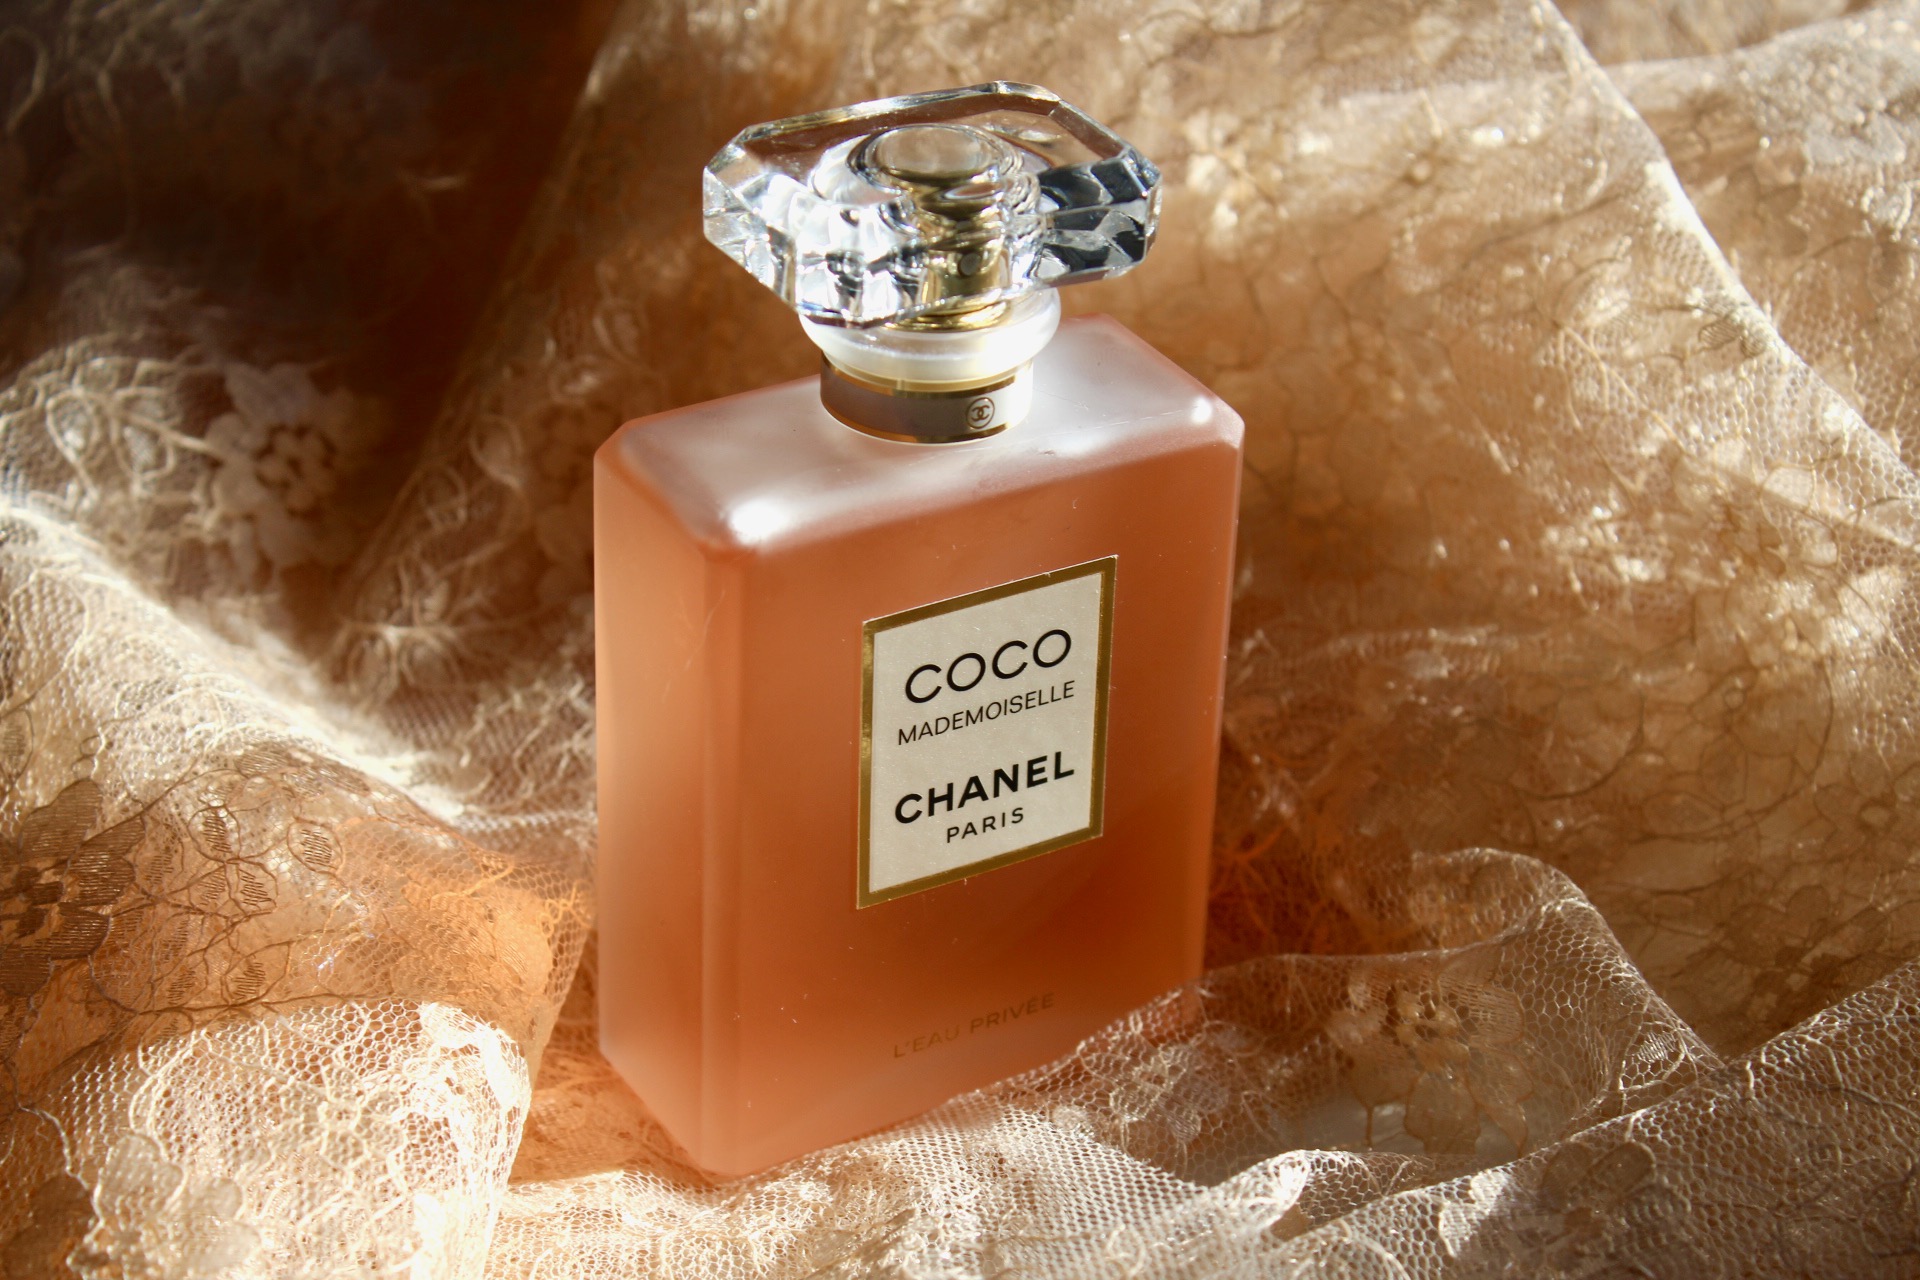 chanel no 9 perfume